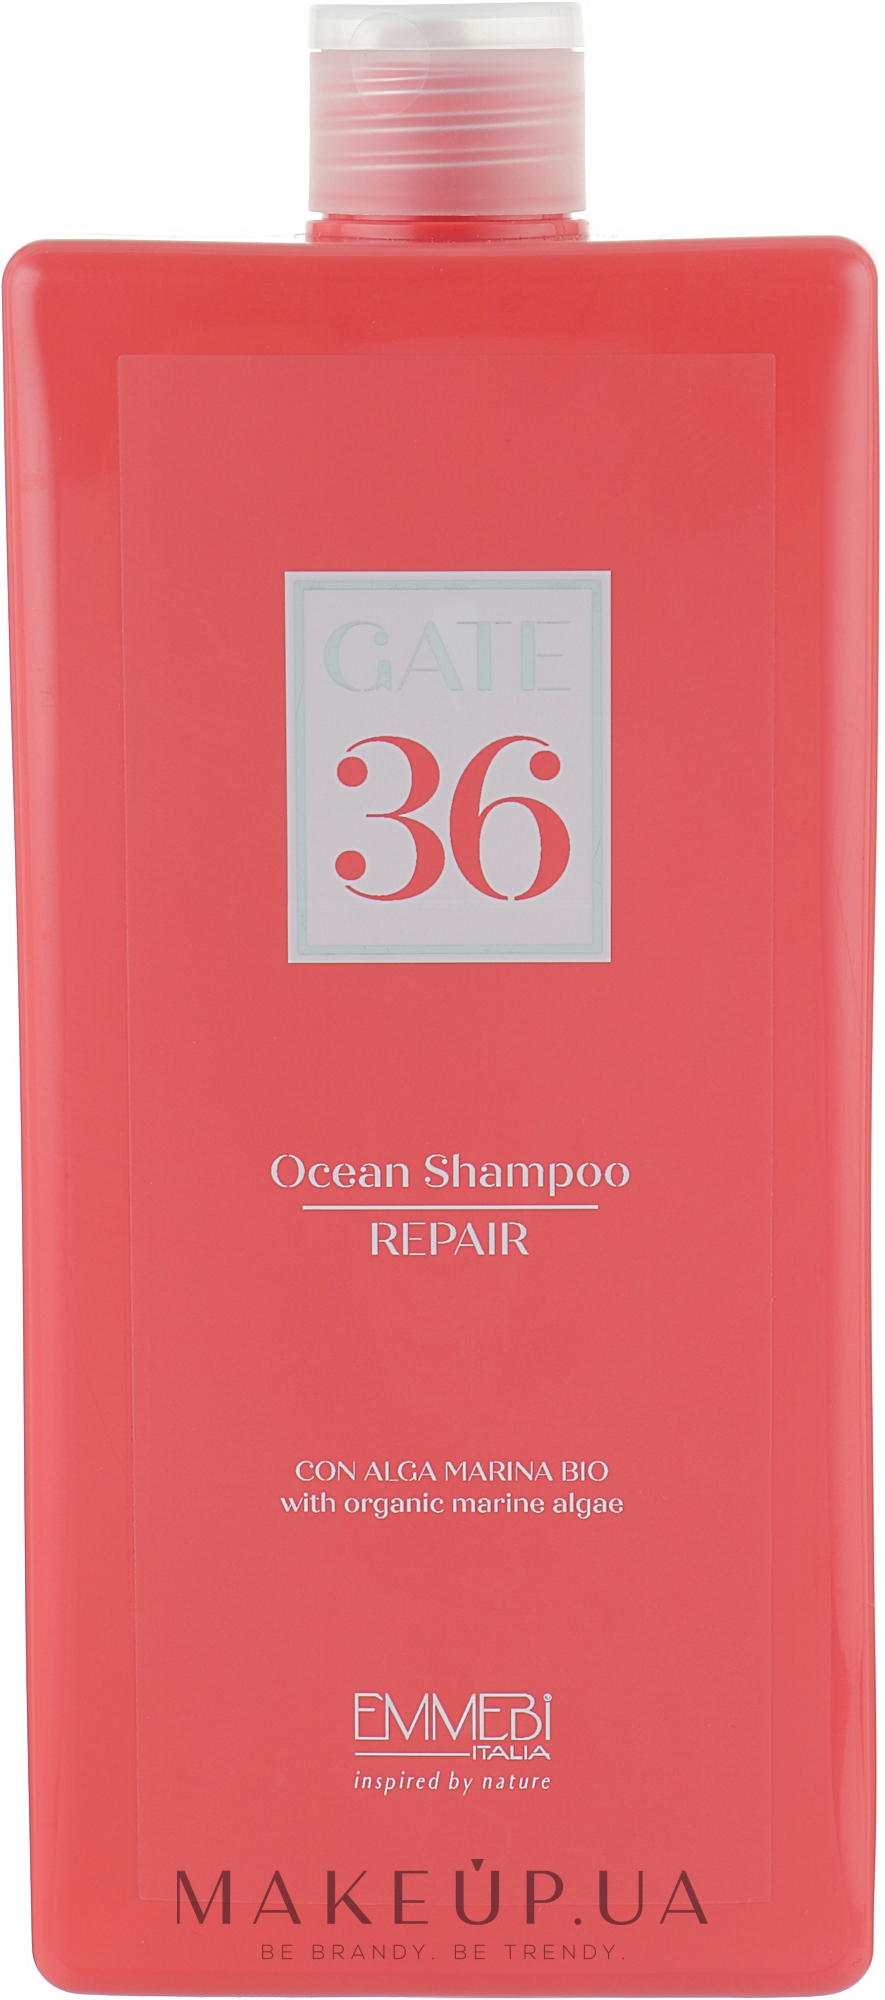 Восстанавливающий шампунь для волос - Emmebi Italia Gate 36 Wash Ocean Shampoo Repair — фото 1000ml